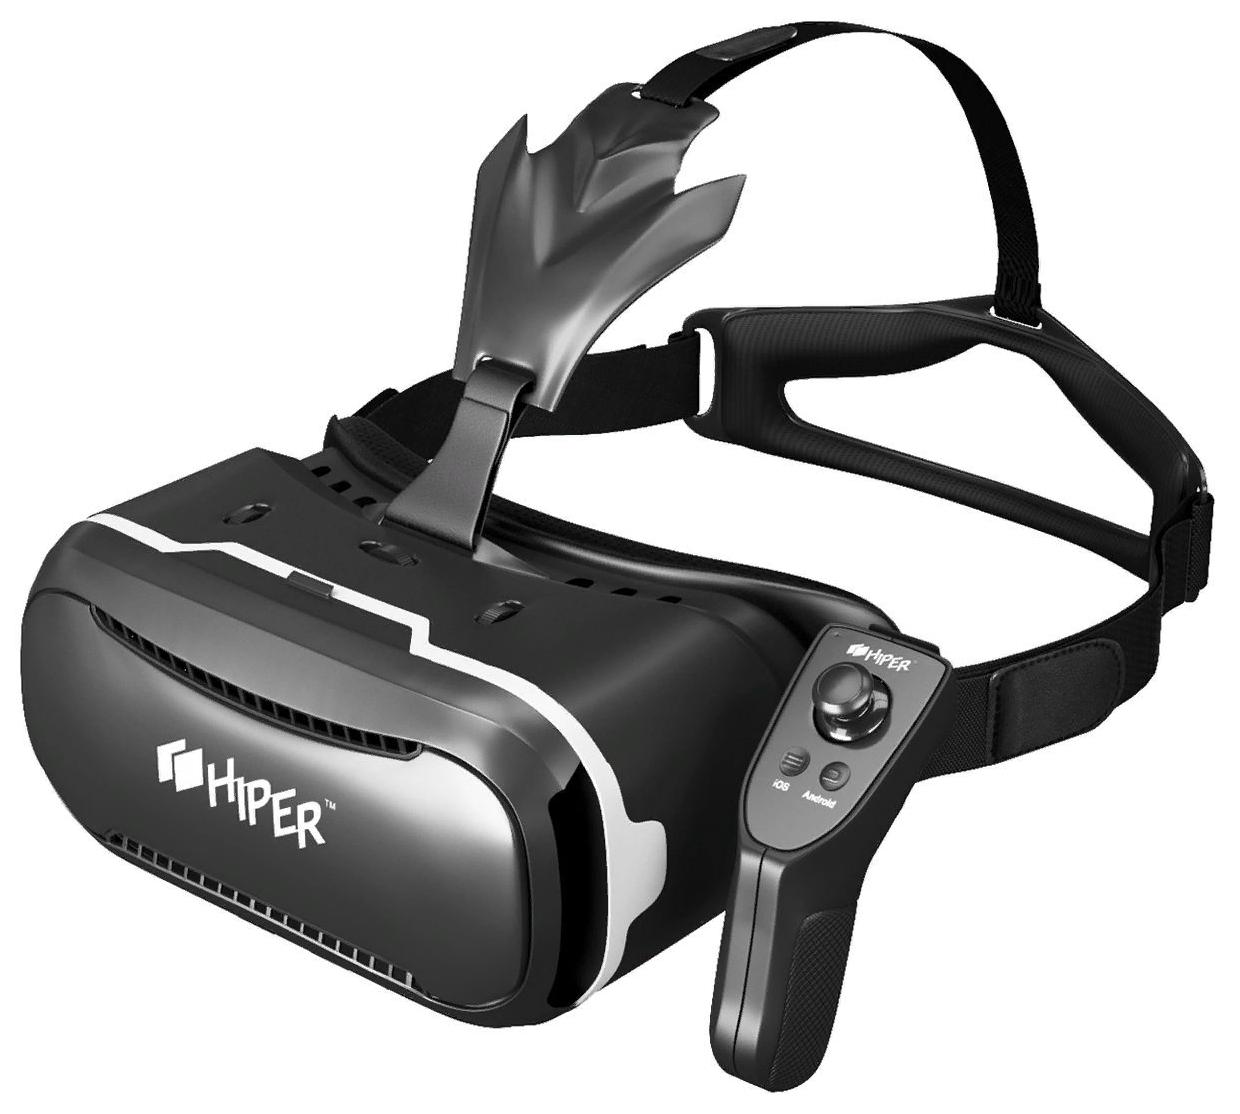 Vr очков hiper. Очки виртуальной реальности Hiper VR. Очки виртуальной реальности Hiper VR Max. Очки виртуальной реальности Hyper VRQ. Виртуальные очки для смартфона Hiper VRQ.